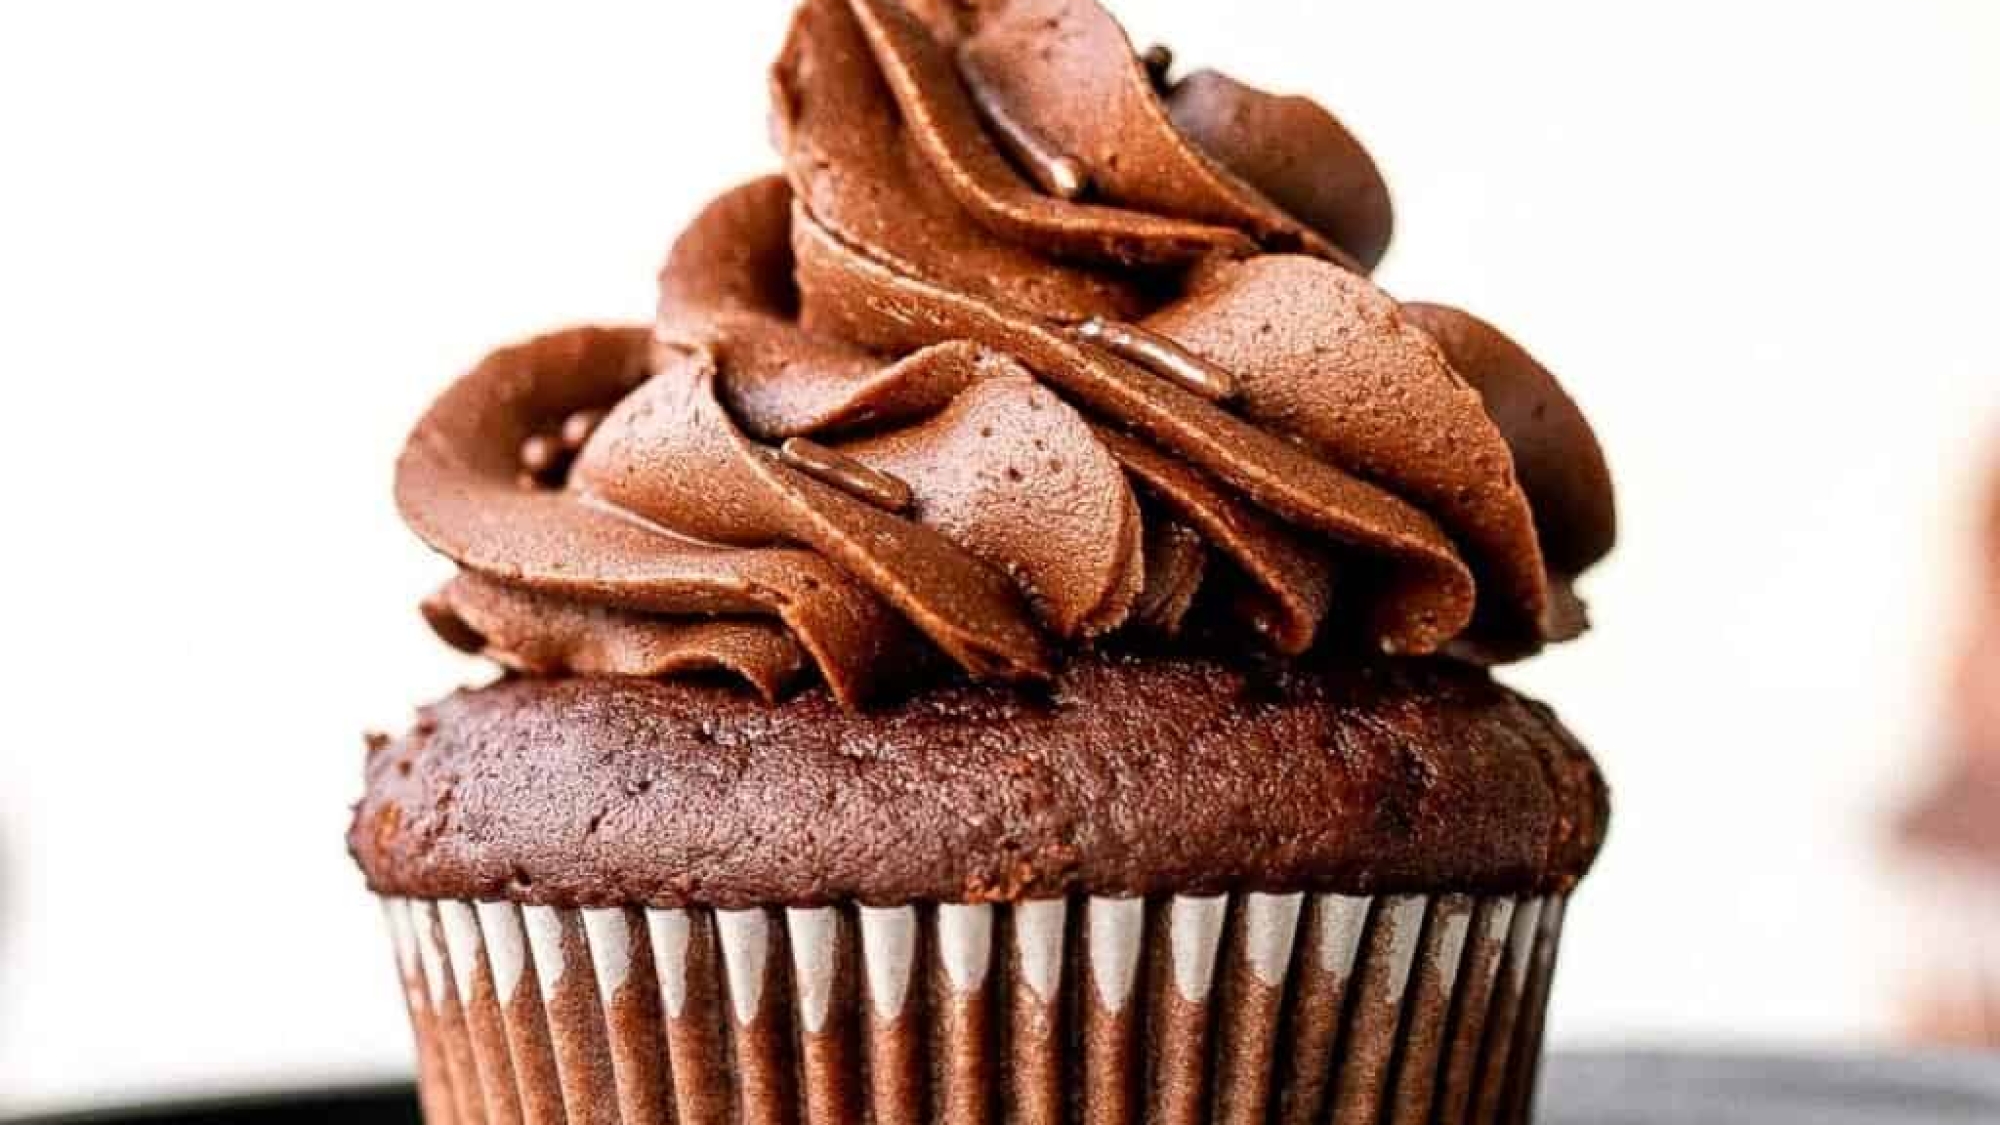 https://www.aheadofthyme.com/wp-content/uploads/2021/04/moist-chocolate-cupcakes-2-1024x1536.jpg